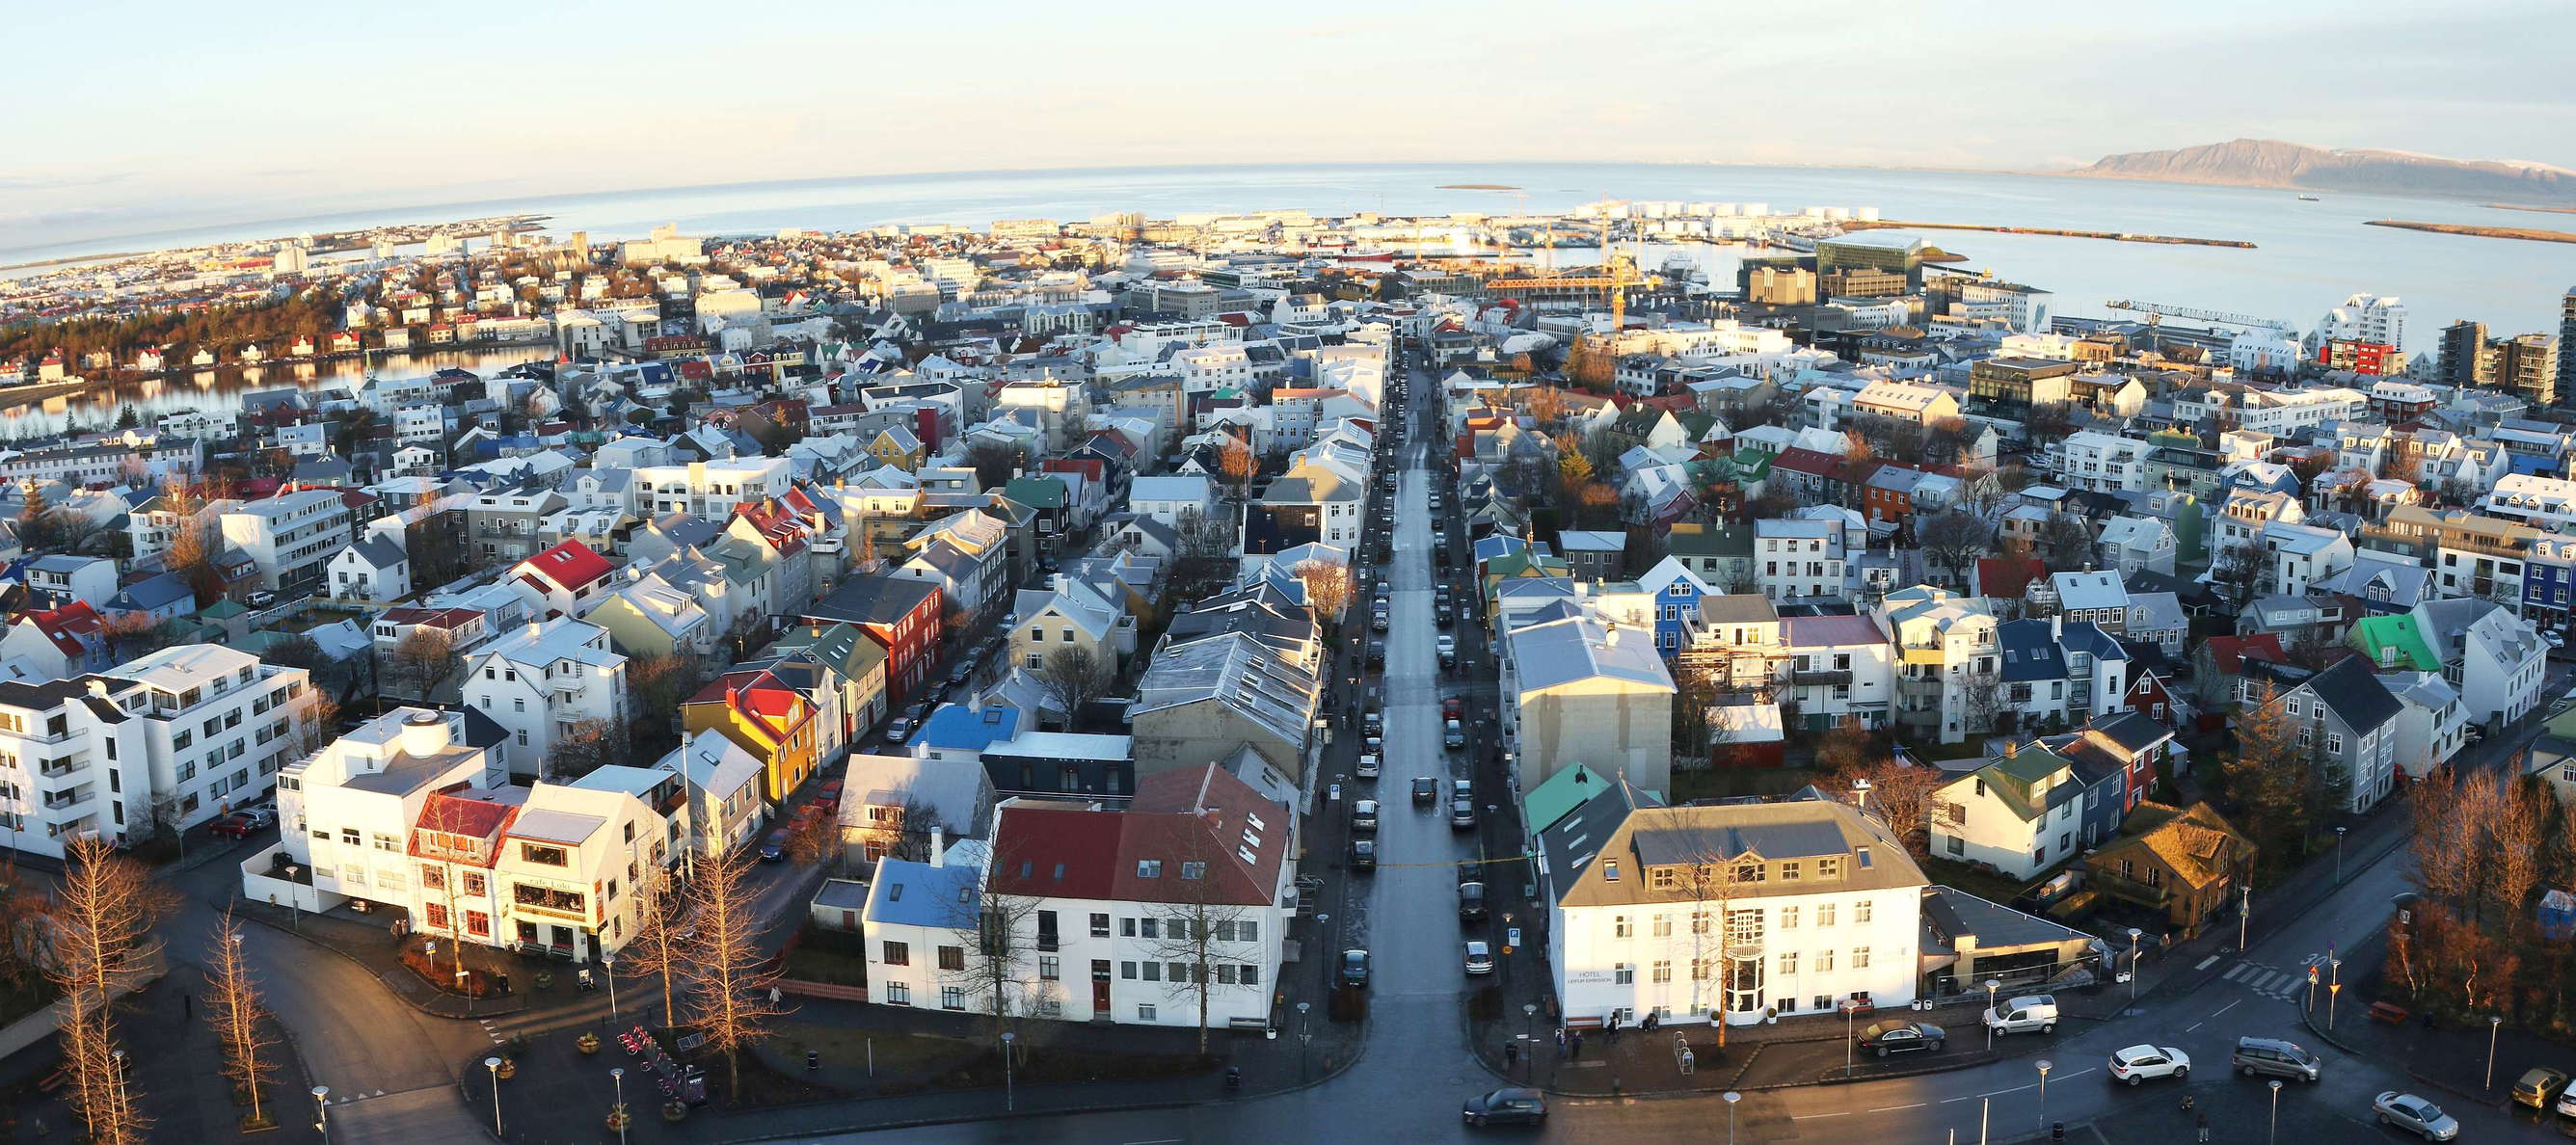 Reykjavik | Panorama of city centre